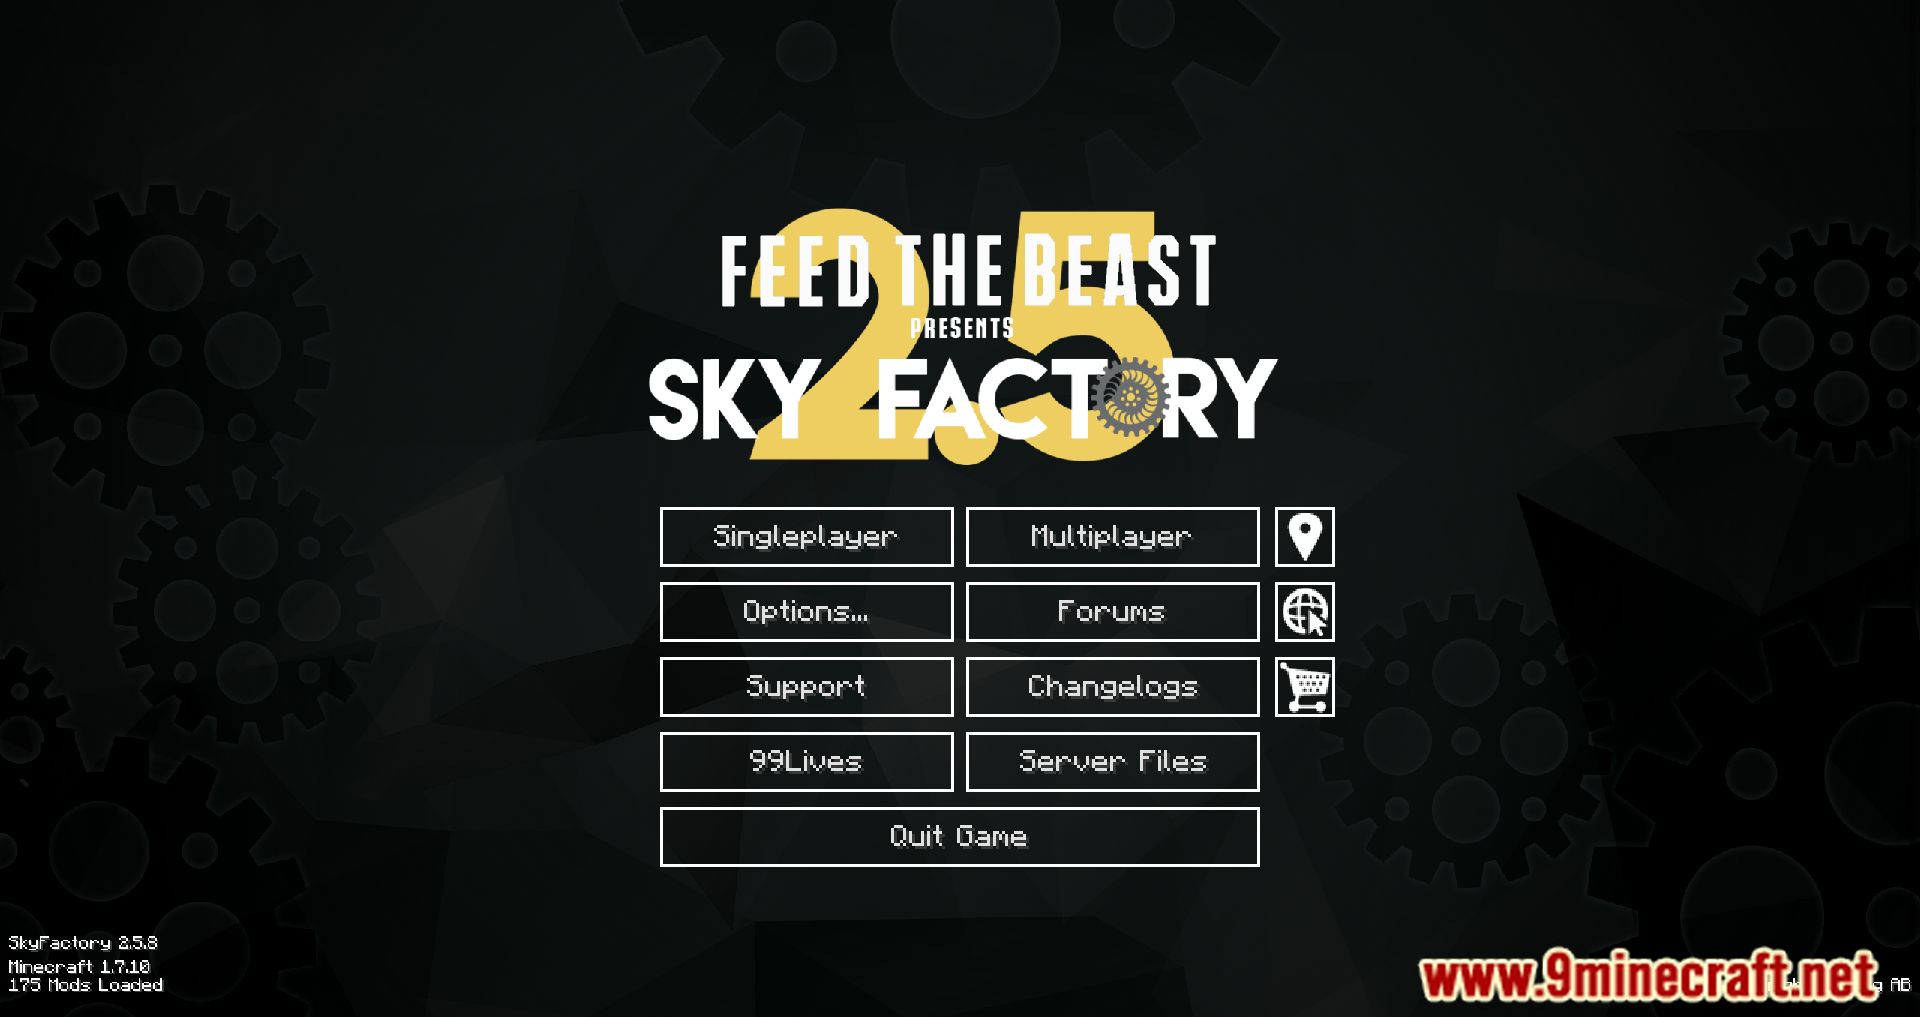 FTB Presents SkyFactory 2.5 Modpack (1.7.10) - Another Minecraft Skyblock Modpack 2